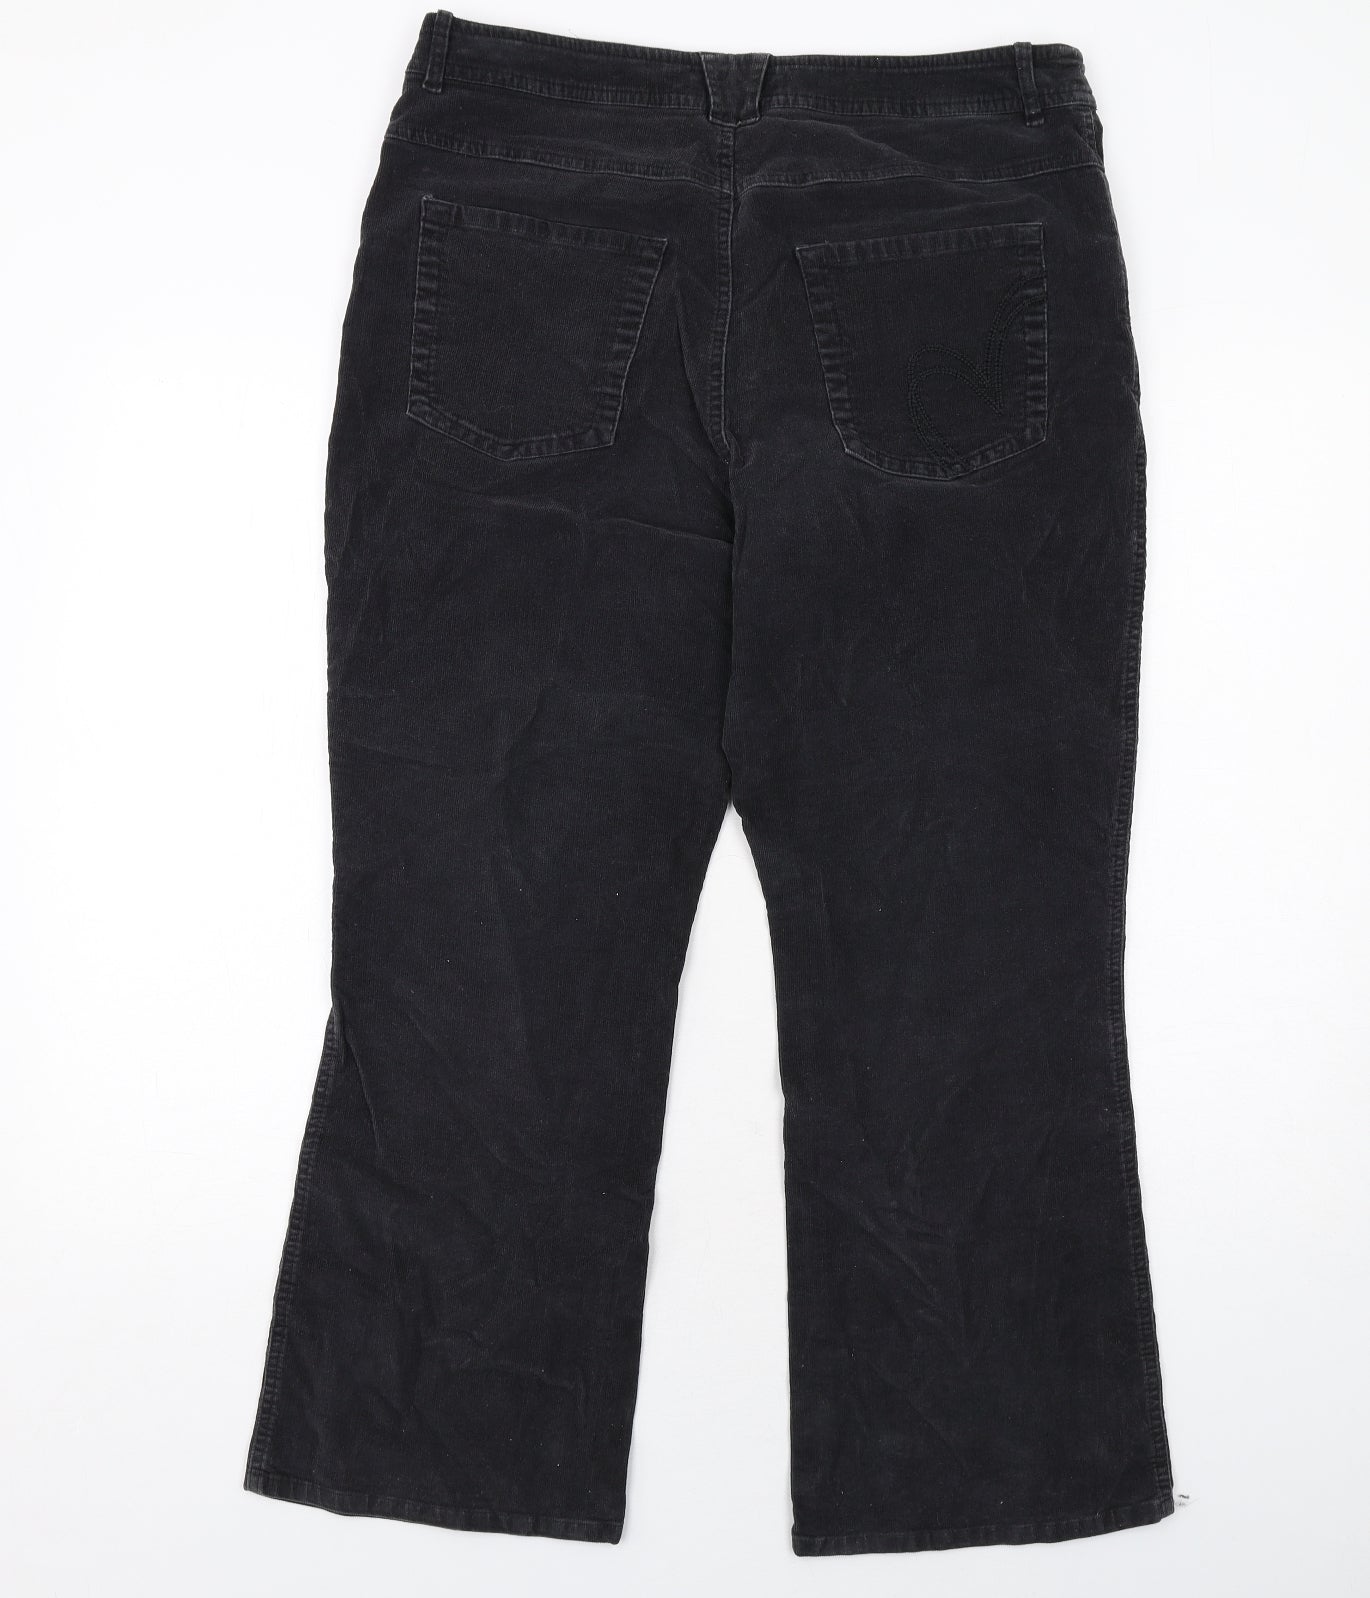 Per Una Womens Black Cotton Trousers Size 16 Regular Zip